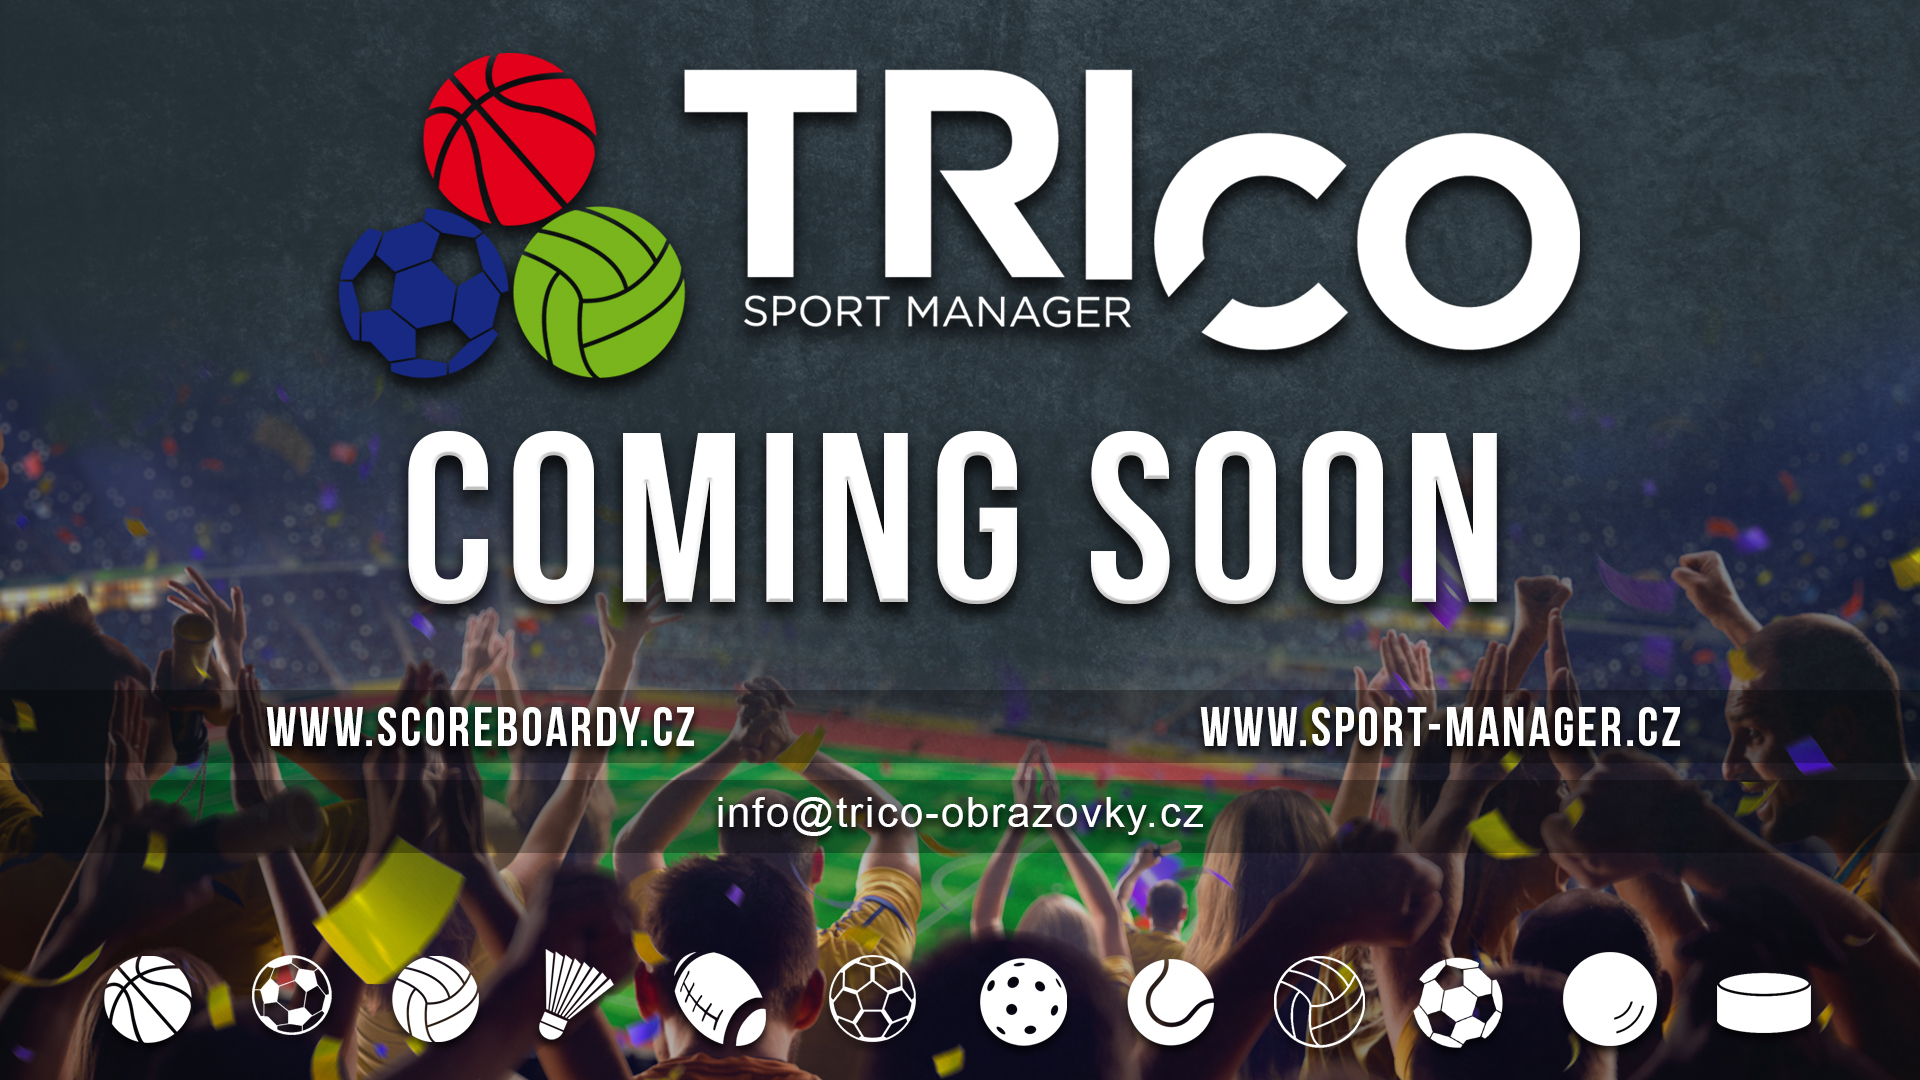 scoreboardy.cz, sport-manager.cz - coming soon!